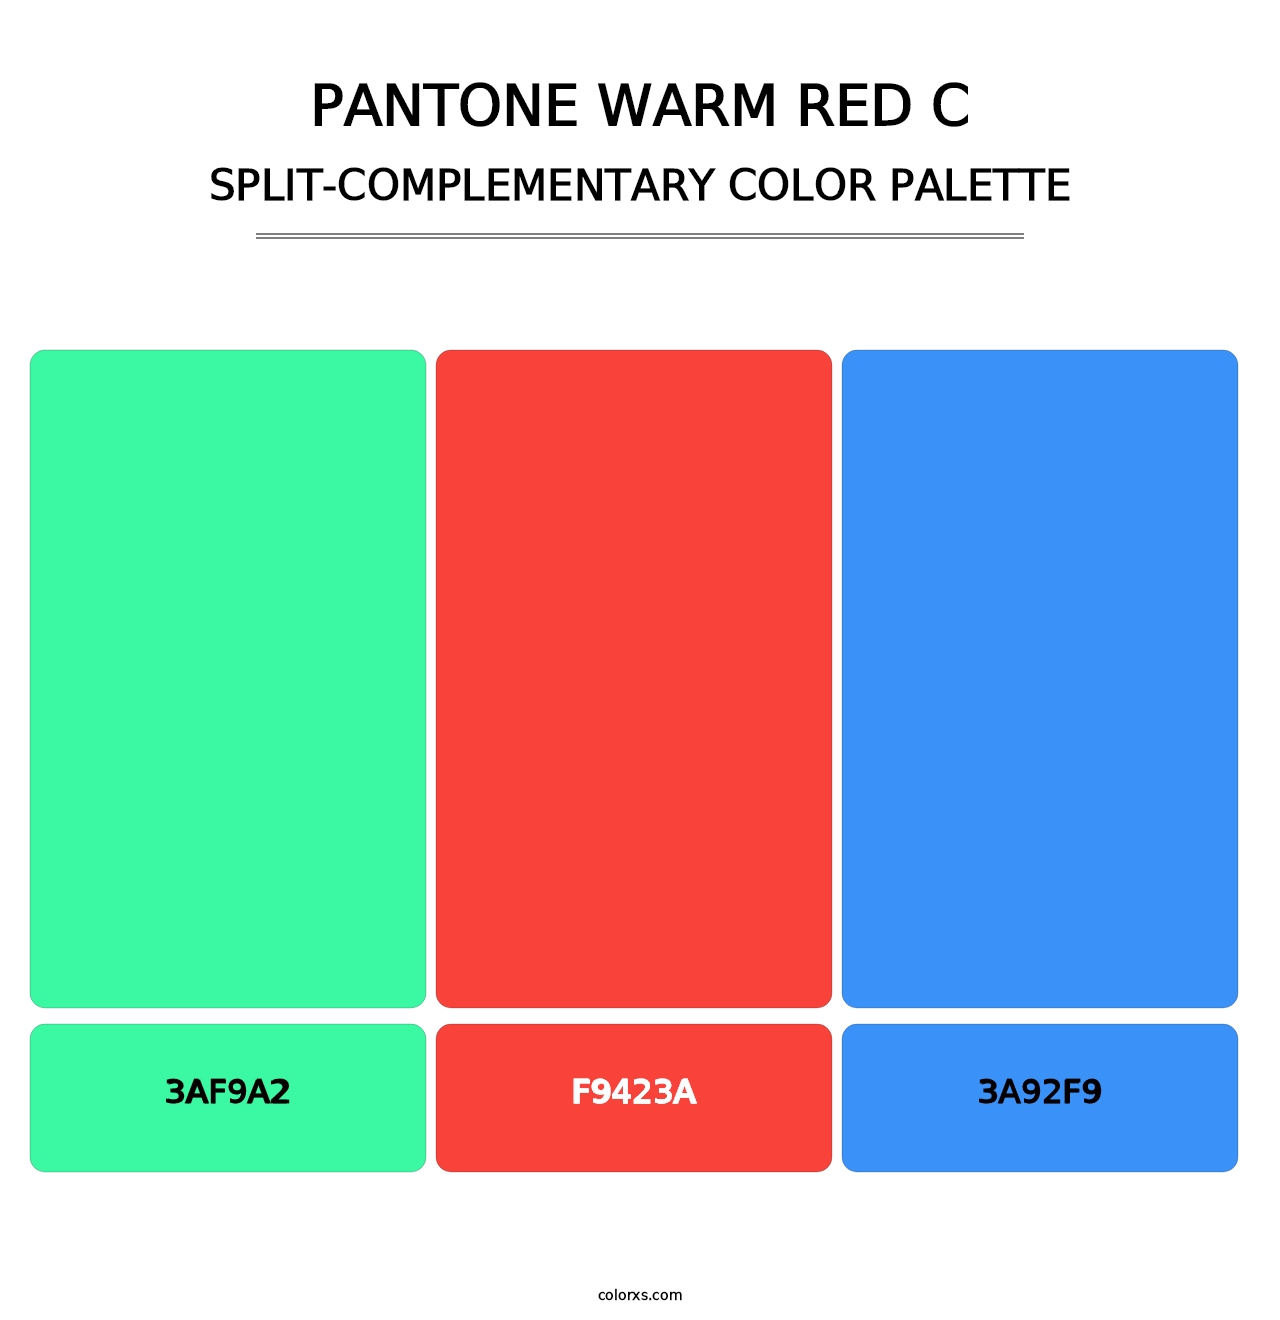 PANTONE Warm Red C - Split-Complementary Color Palette